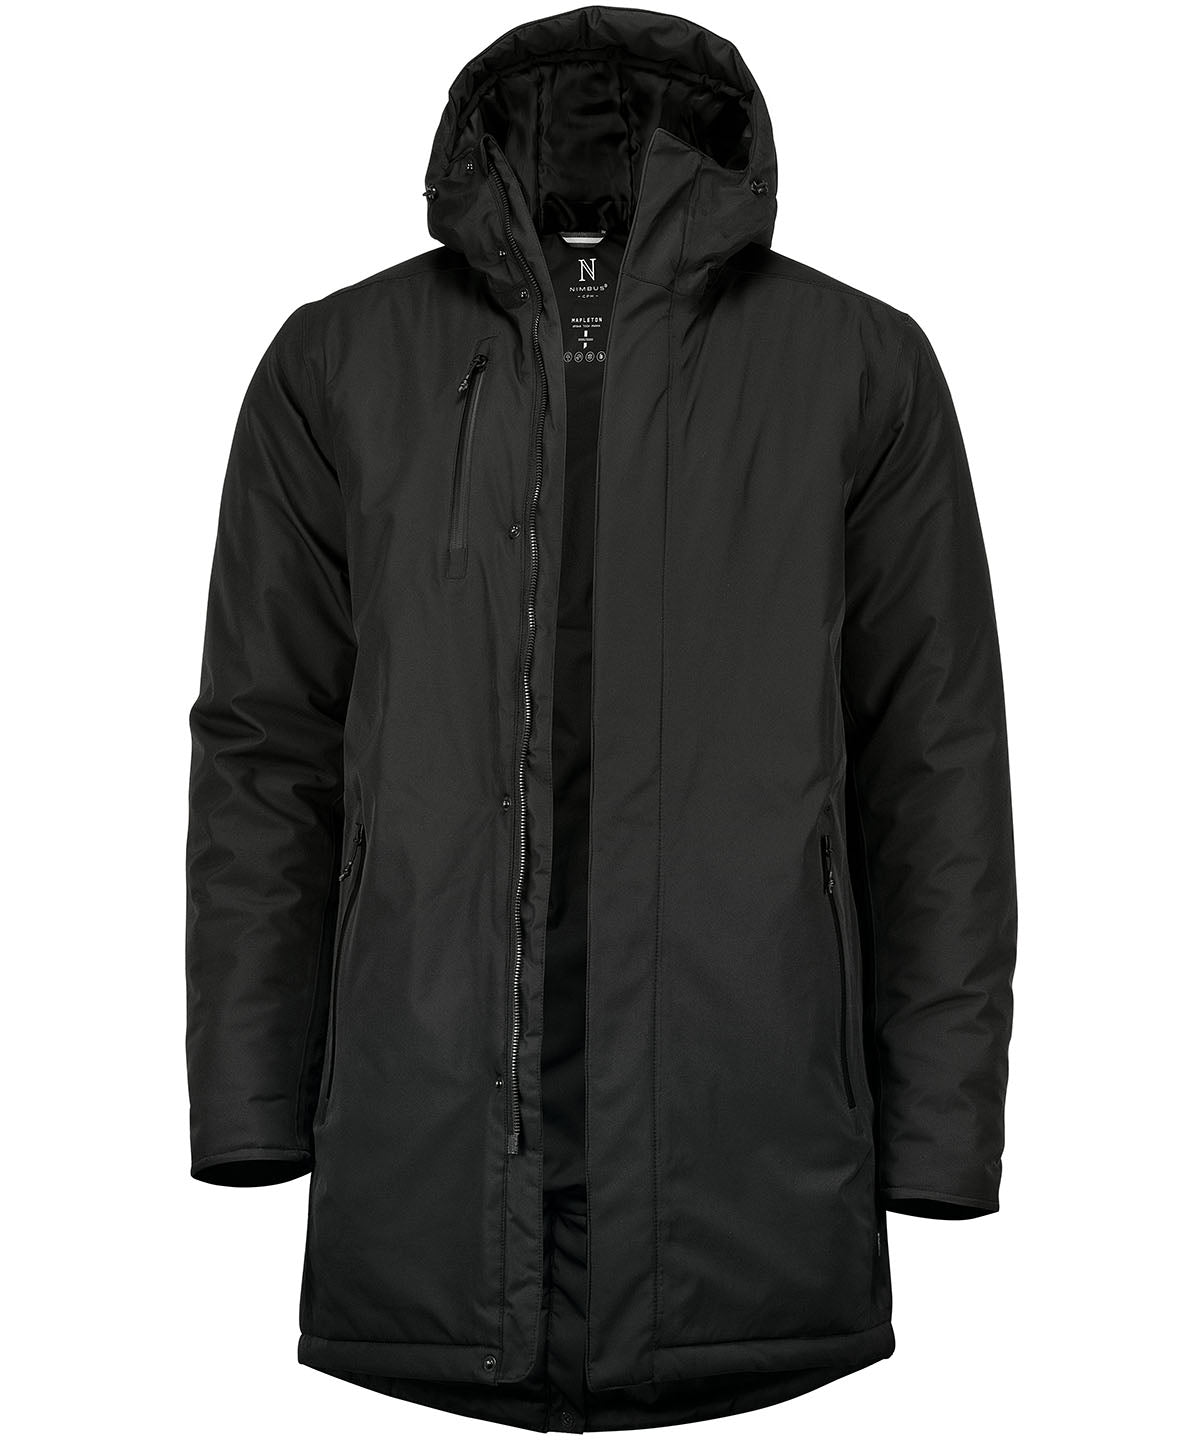 Personalised Jackets - Black Nimbus Mapleton – urban tech parka jacket